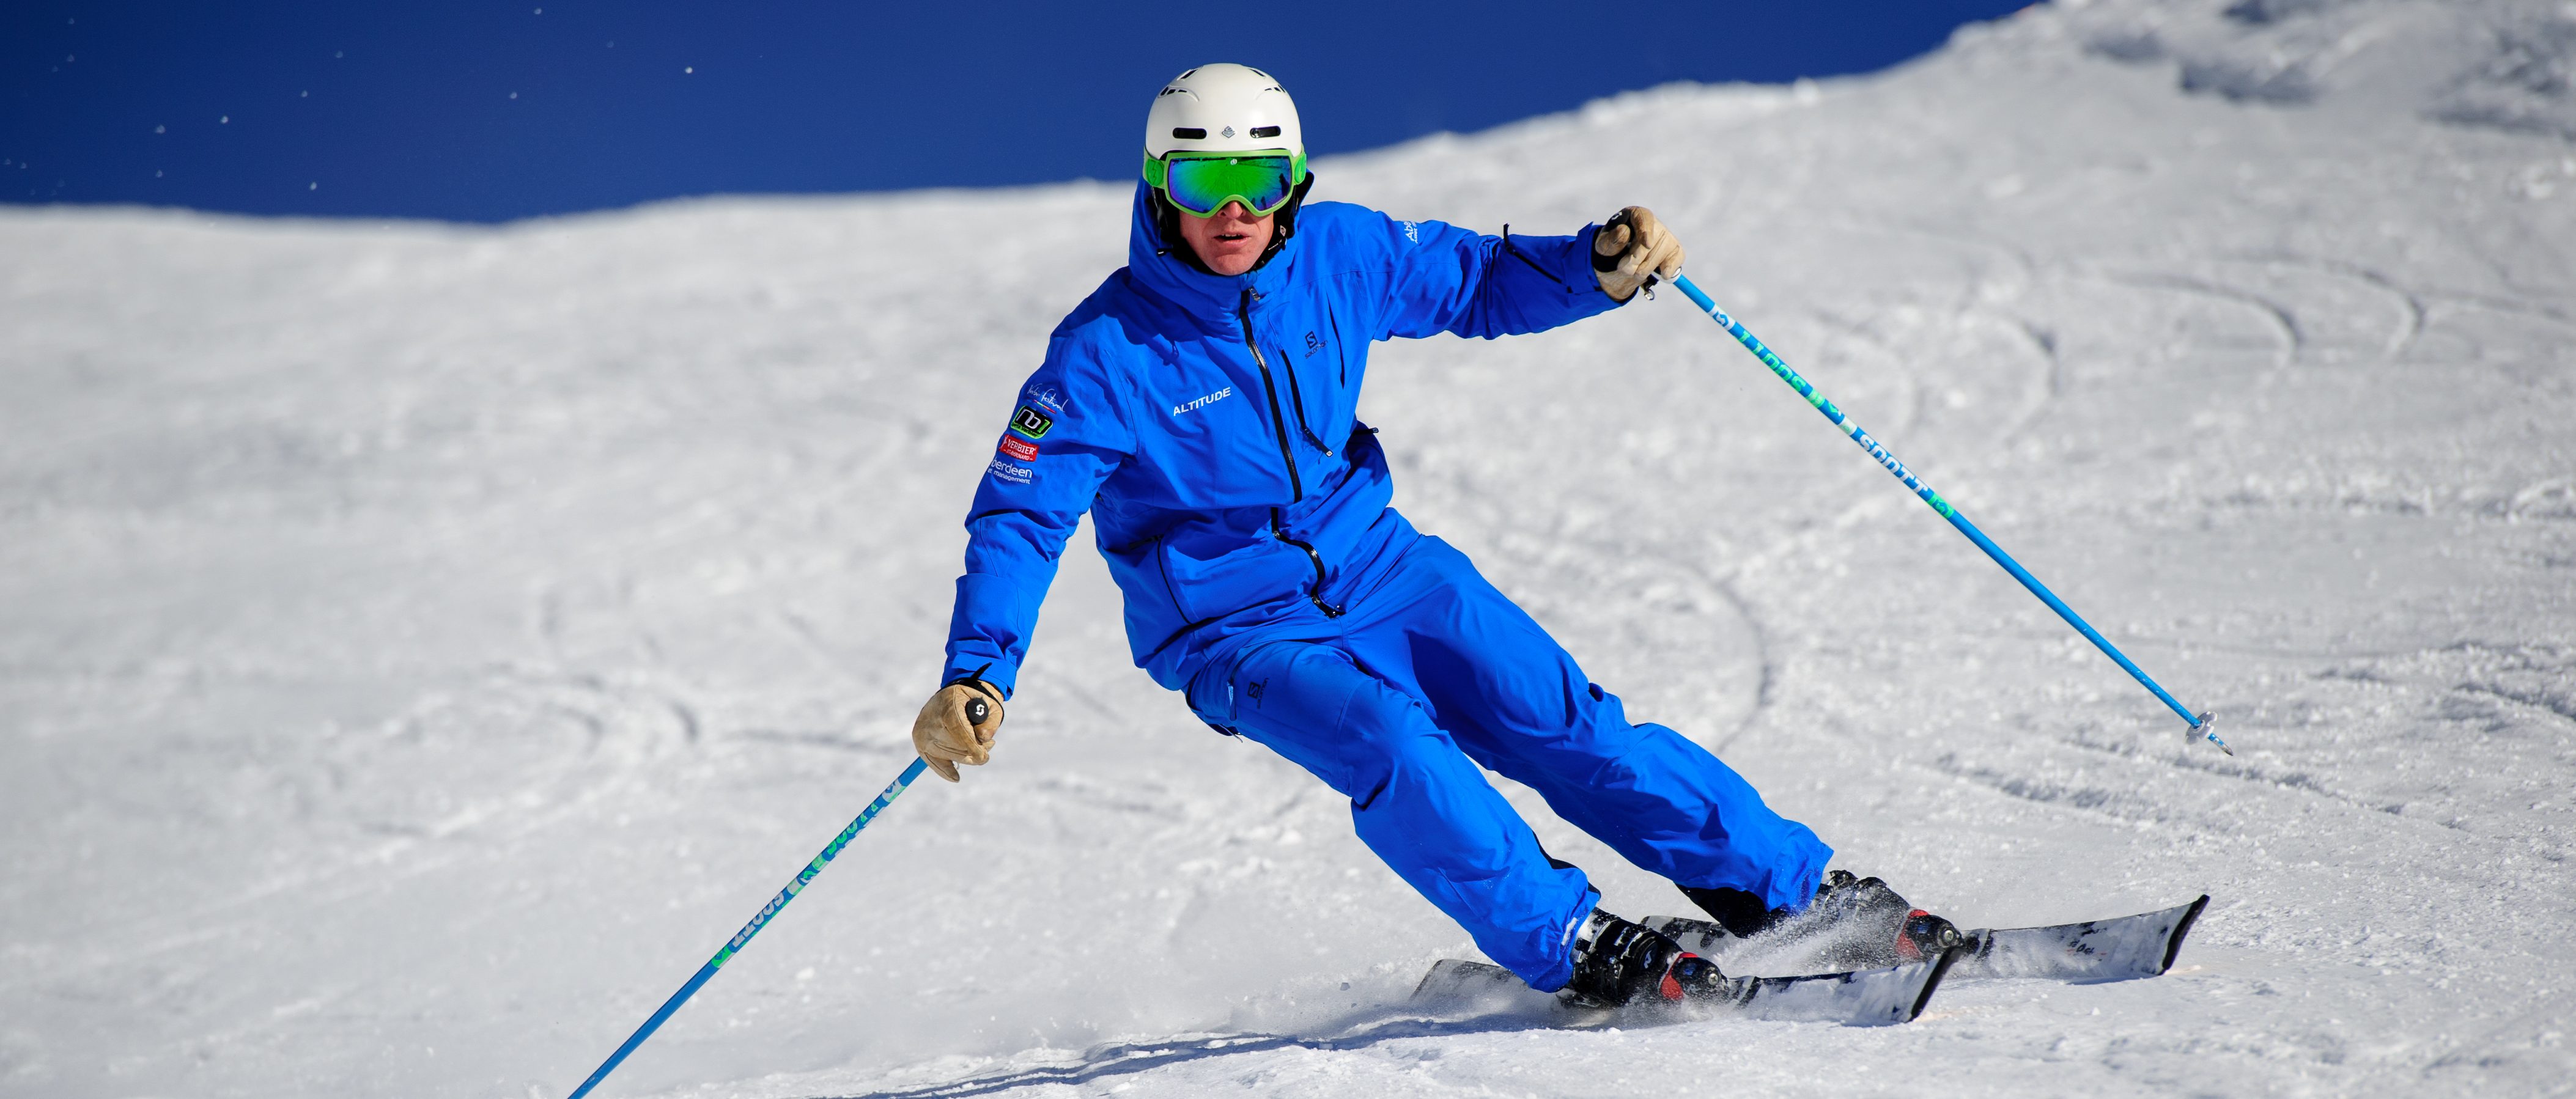 Pre Season Ski Fitness – A few simple tips